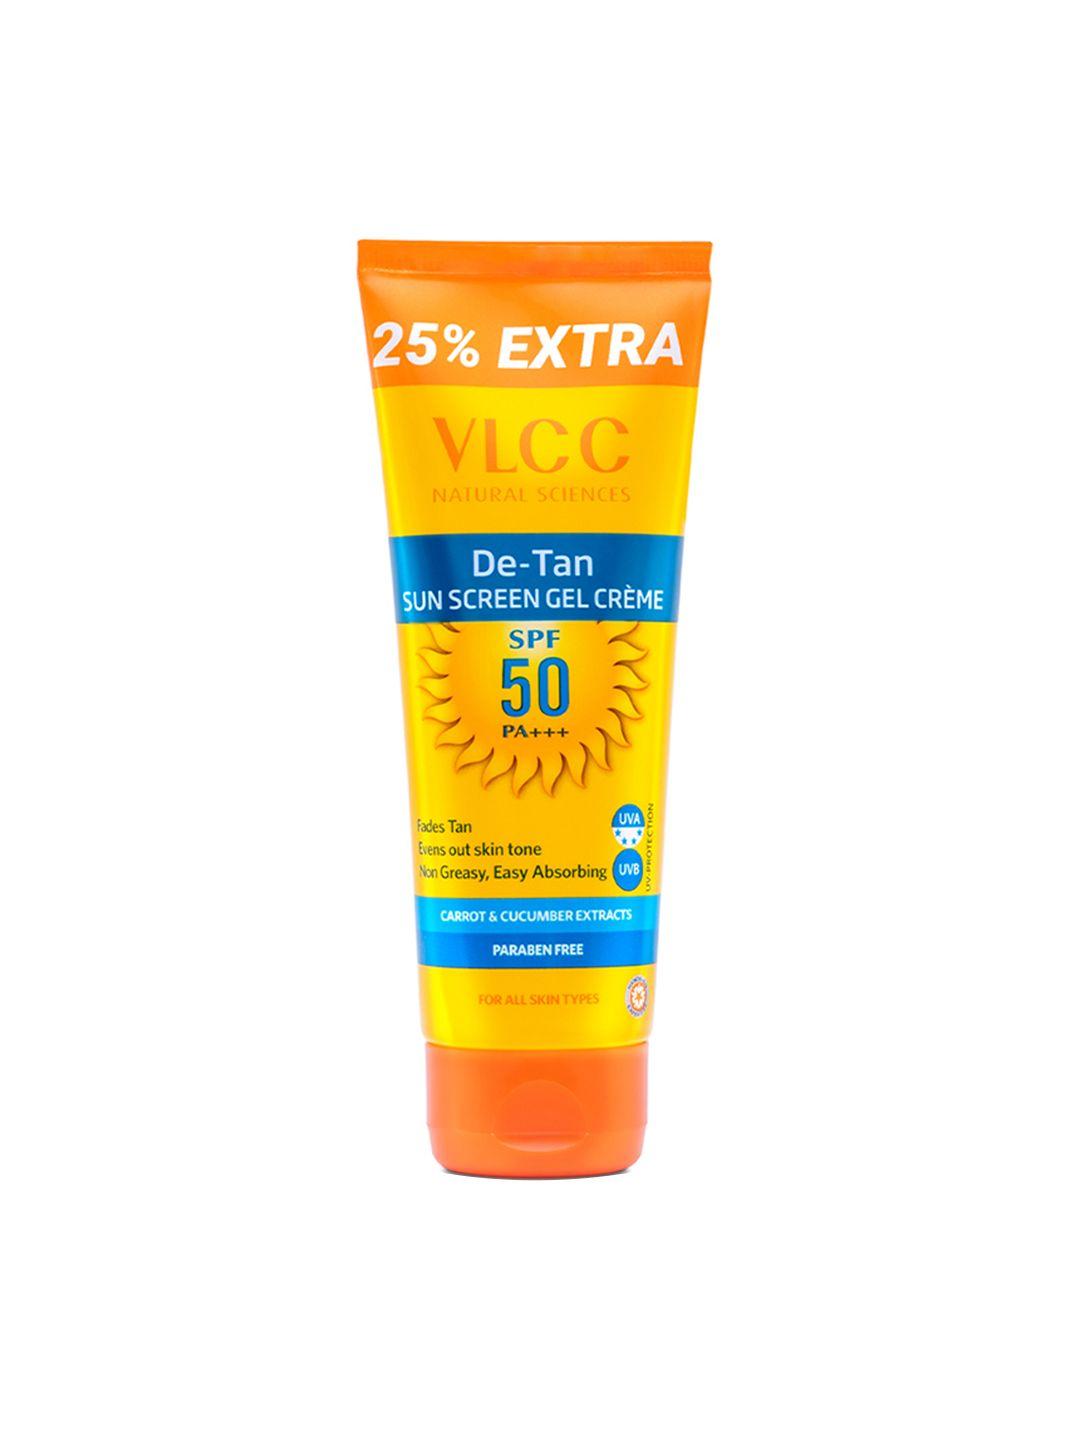 vlcc-de-tan-spf-50-pa+++-sunscreen-gel-cream-for-sun-protection---100-g-with-25-g-extra